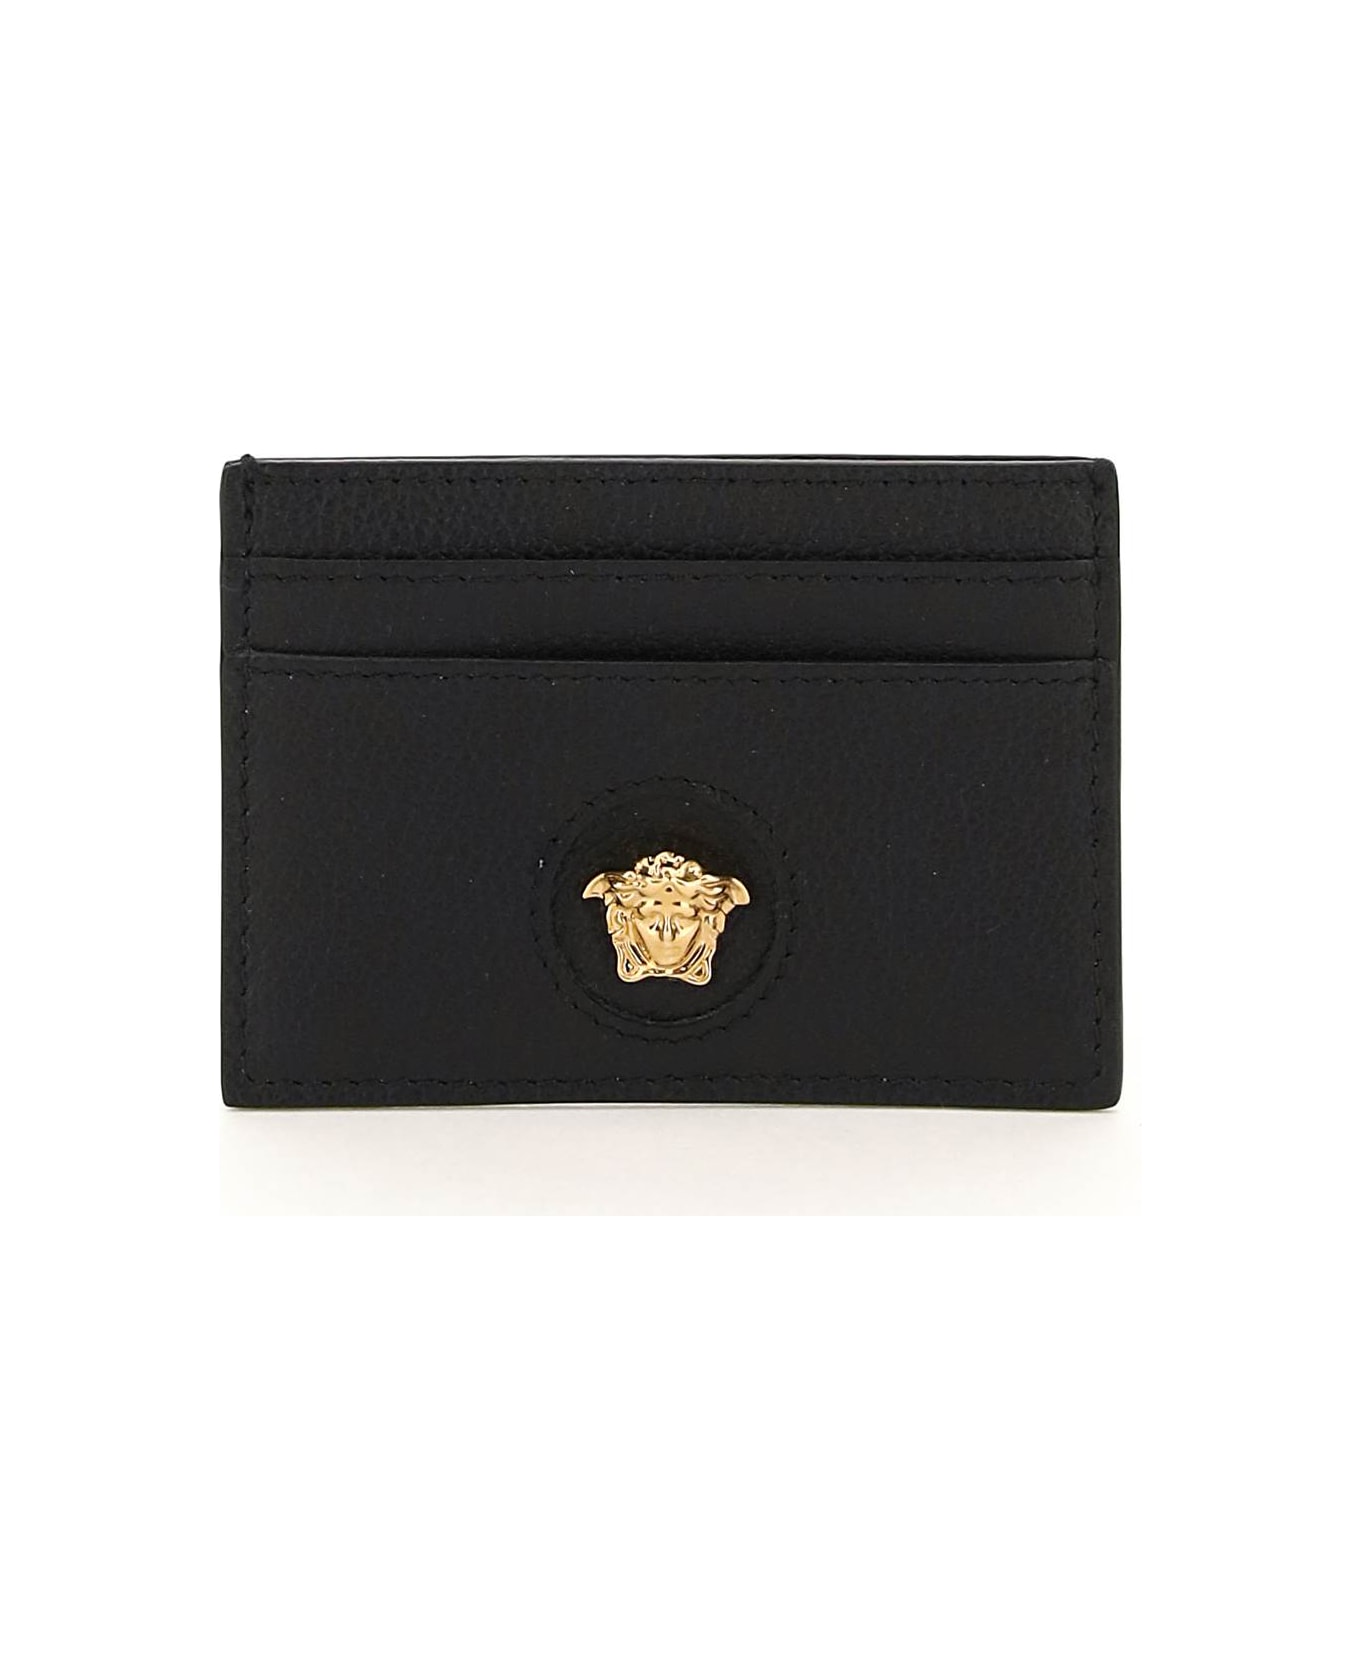 Versace Black Leather La Medusa Card Holder - Nero/oro Versace